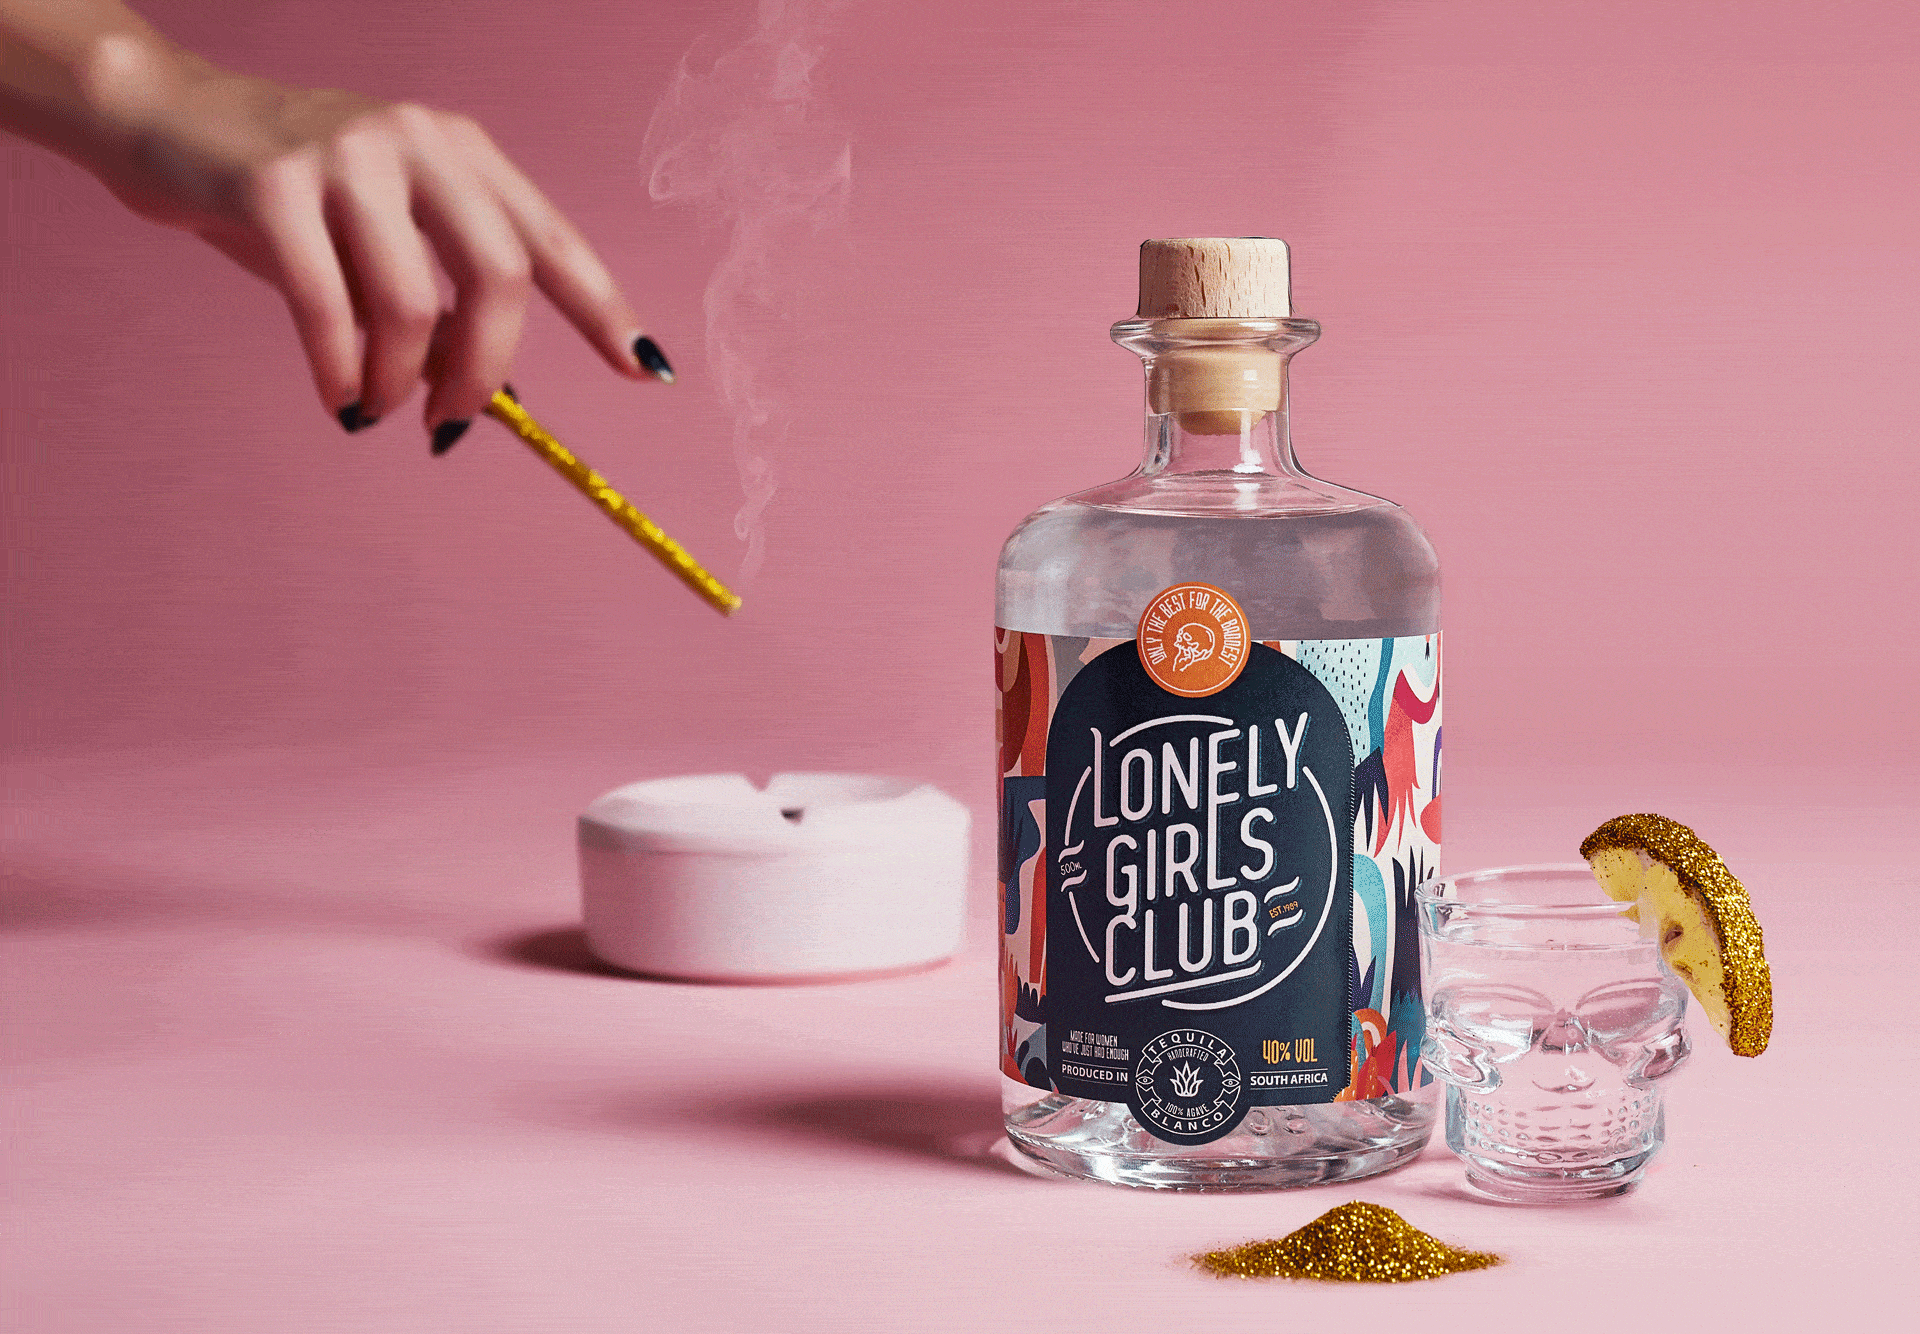 Lonely Girls Club | Packaging | Branding